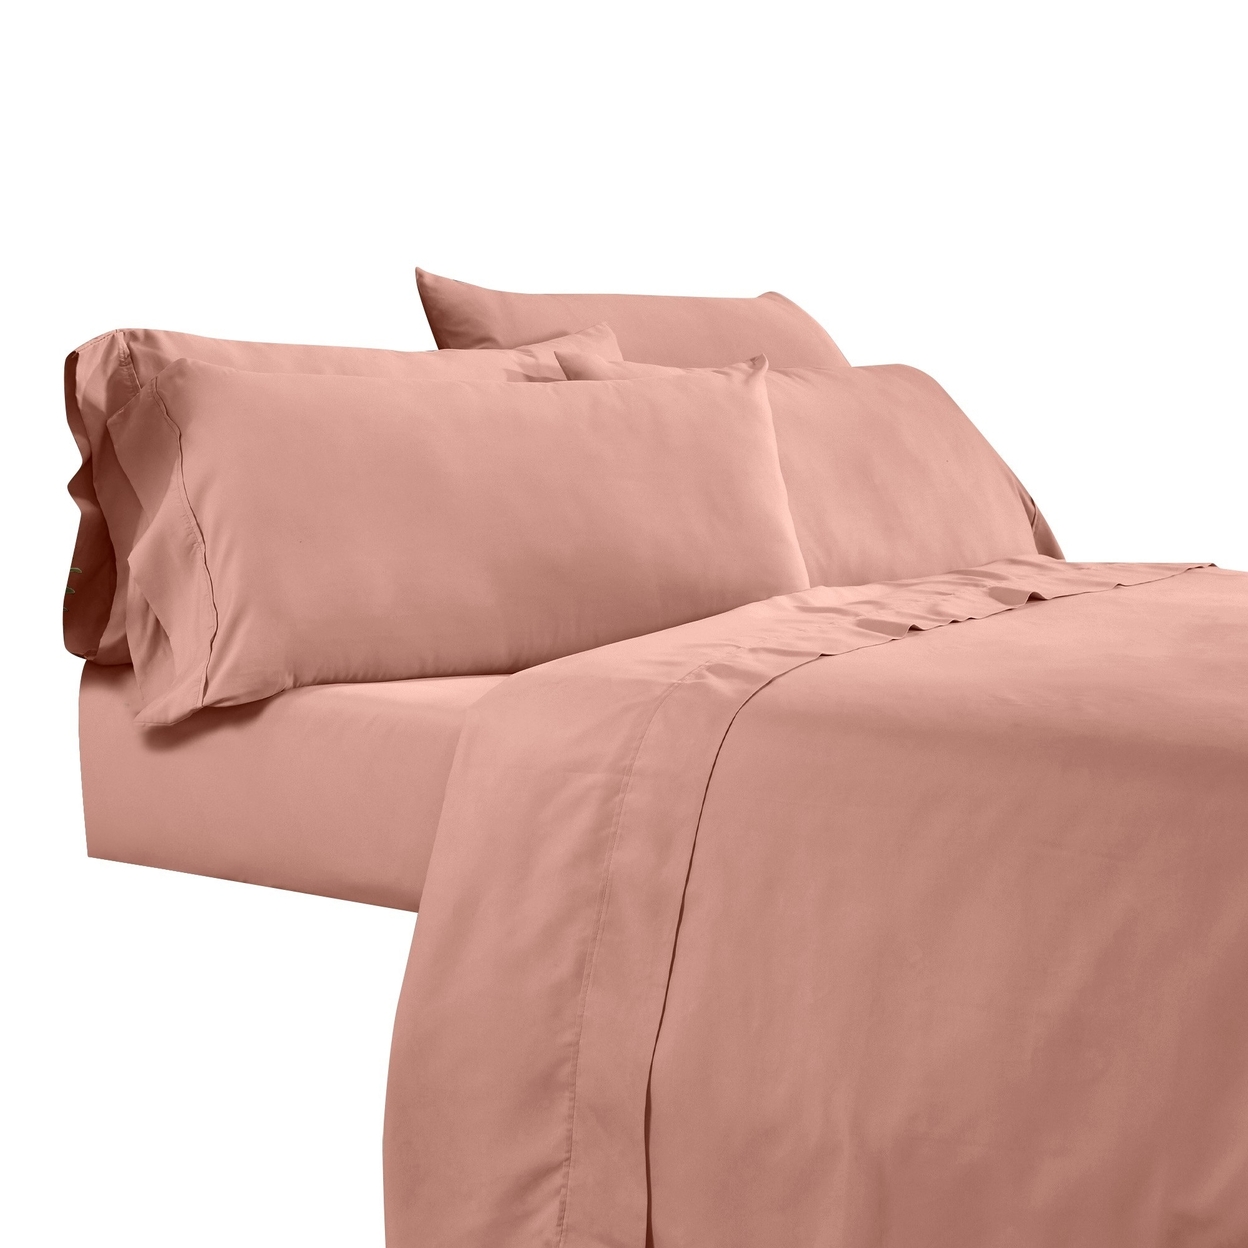 Myla 4 Piece California King Size Sheet Set, Elastic, Silky Pink Microfiber- Saltoro Sherpi